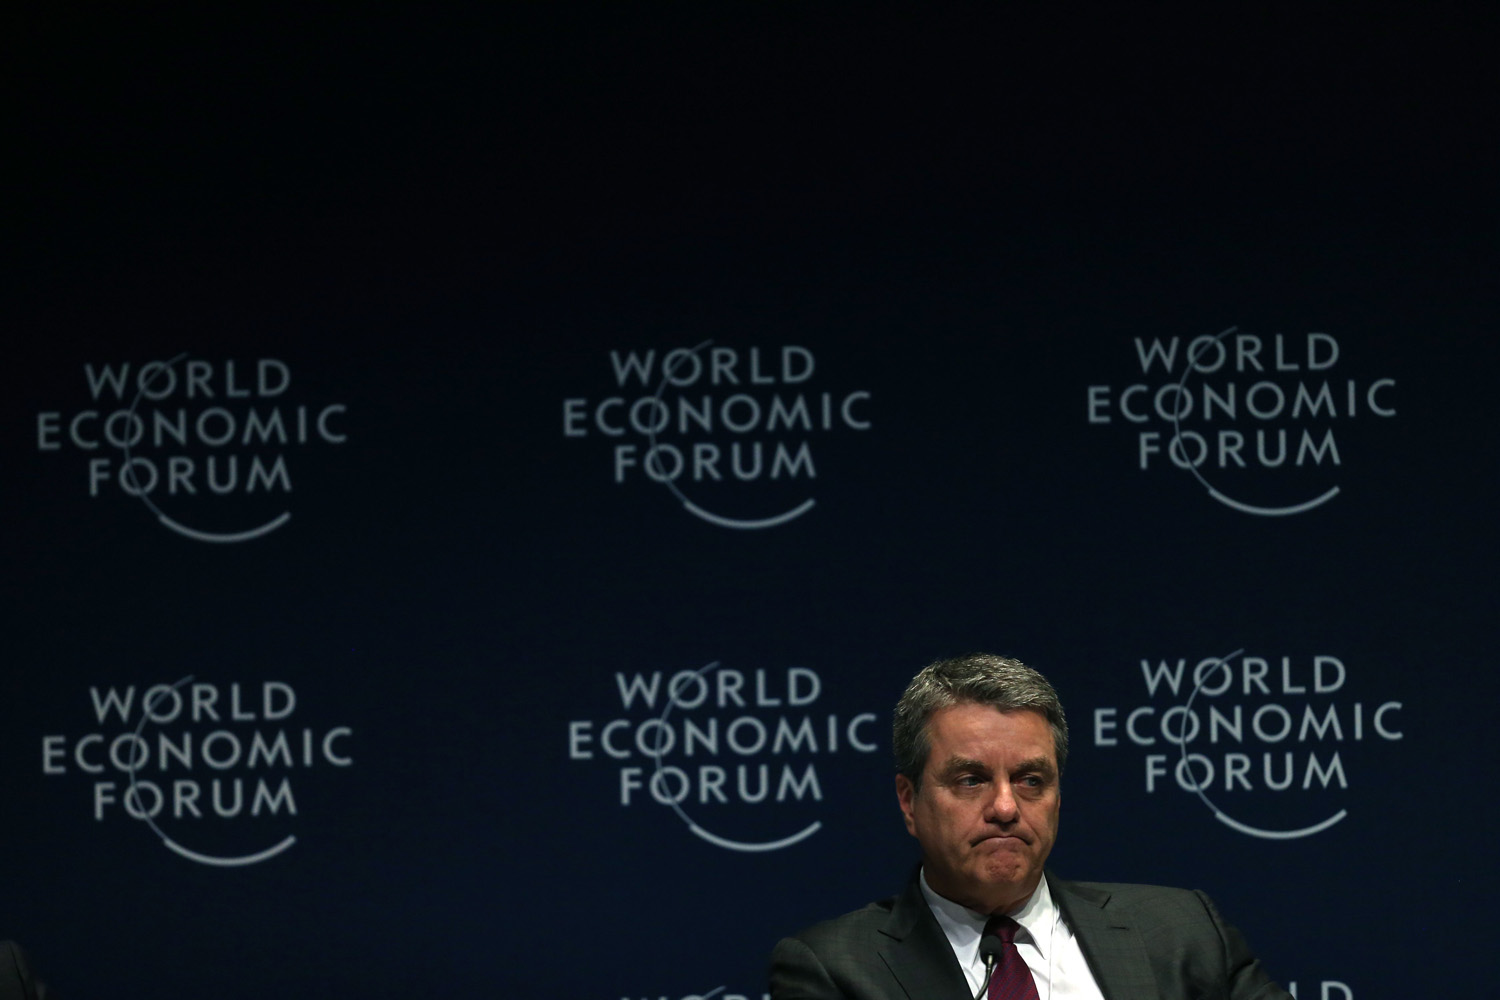 Director de OMC advierte de alteración en economía global